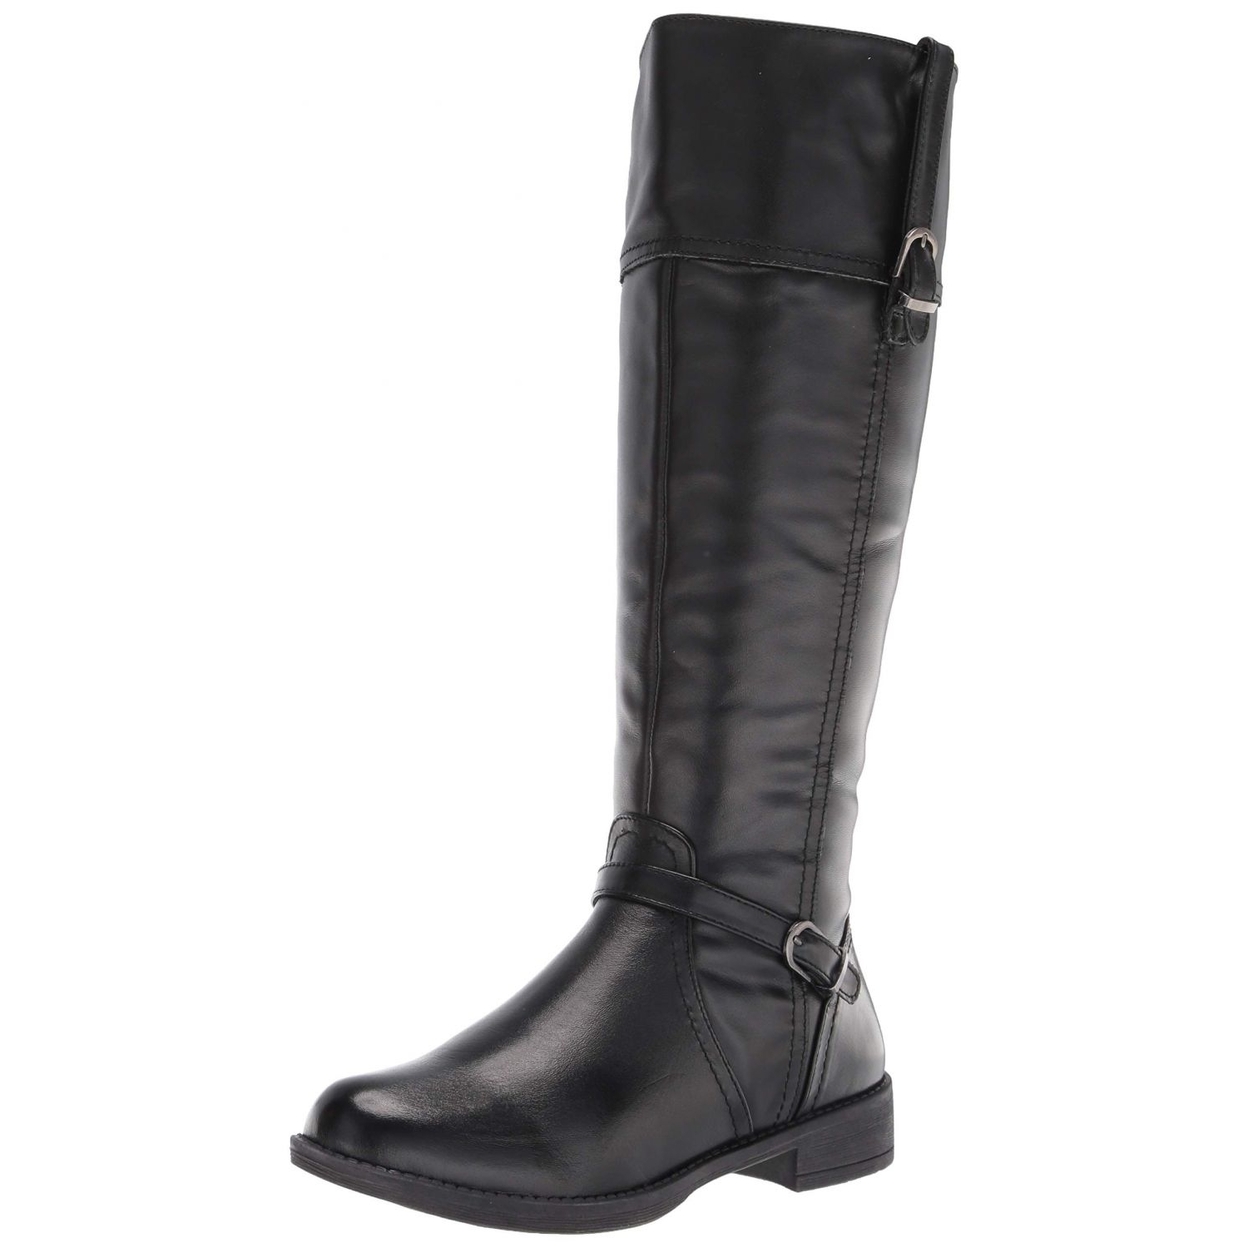 Propet Womens Tasha Zippered Casual Boots Knee High Low Heel 1-2 - Black BROWN - BROWN, 9 X-Wide